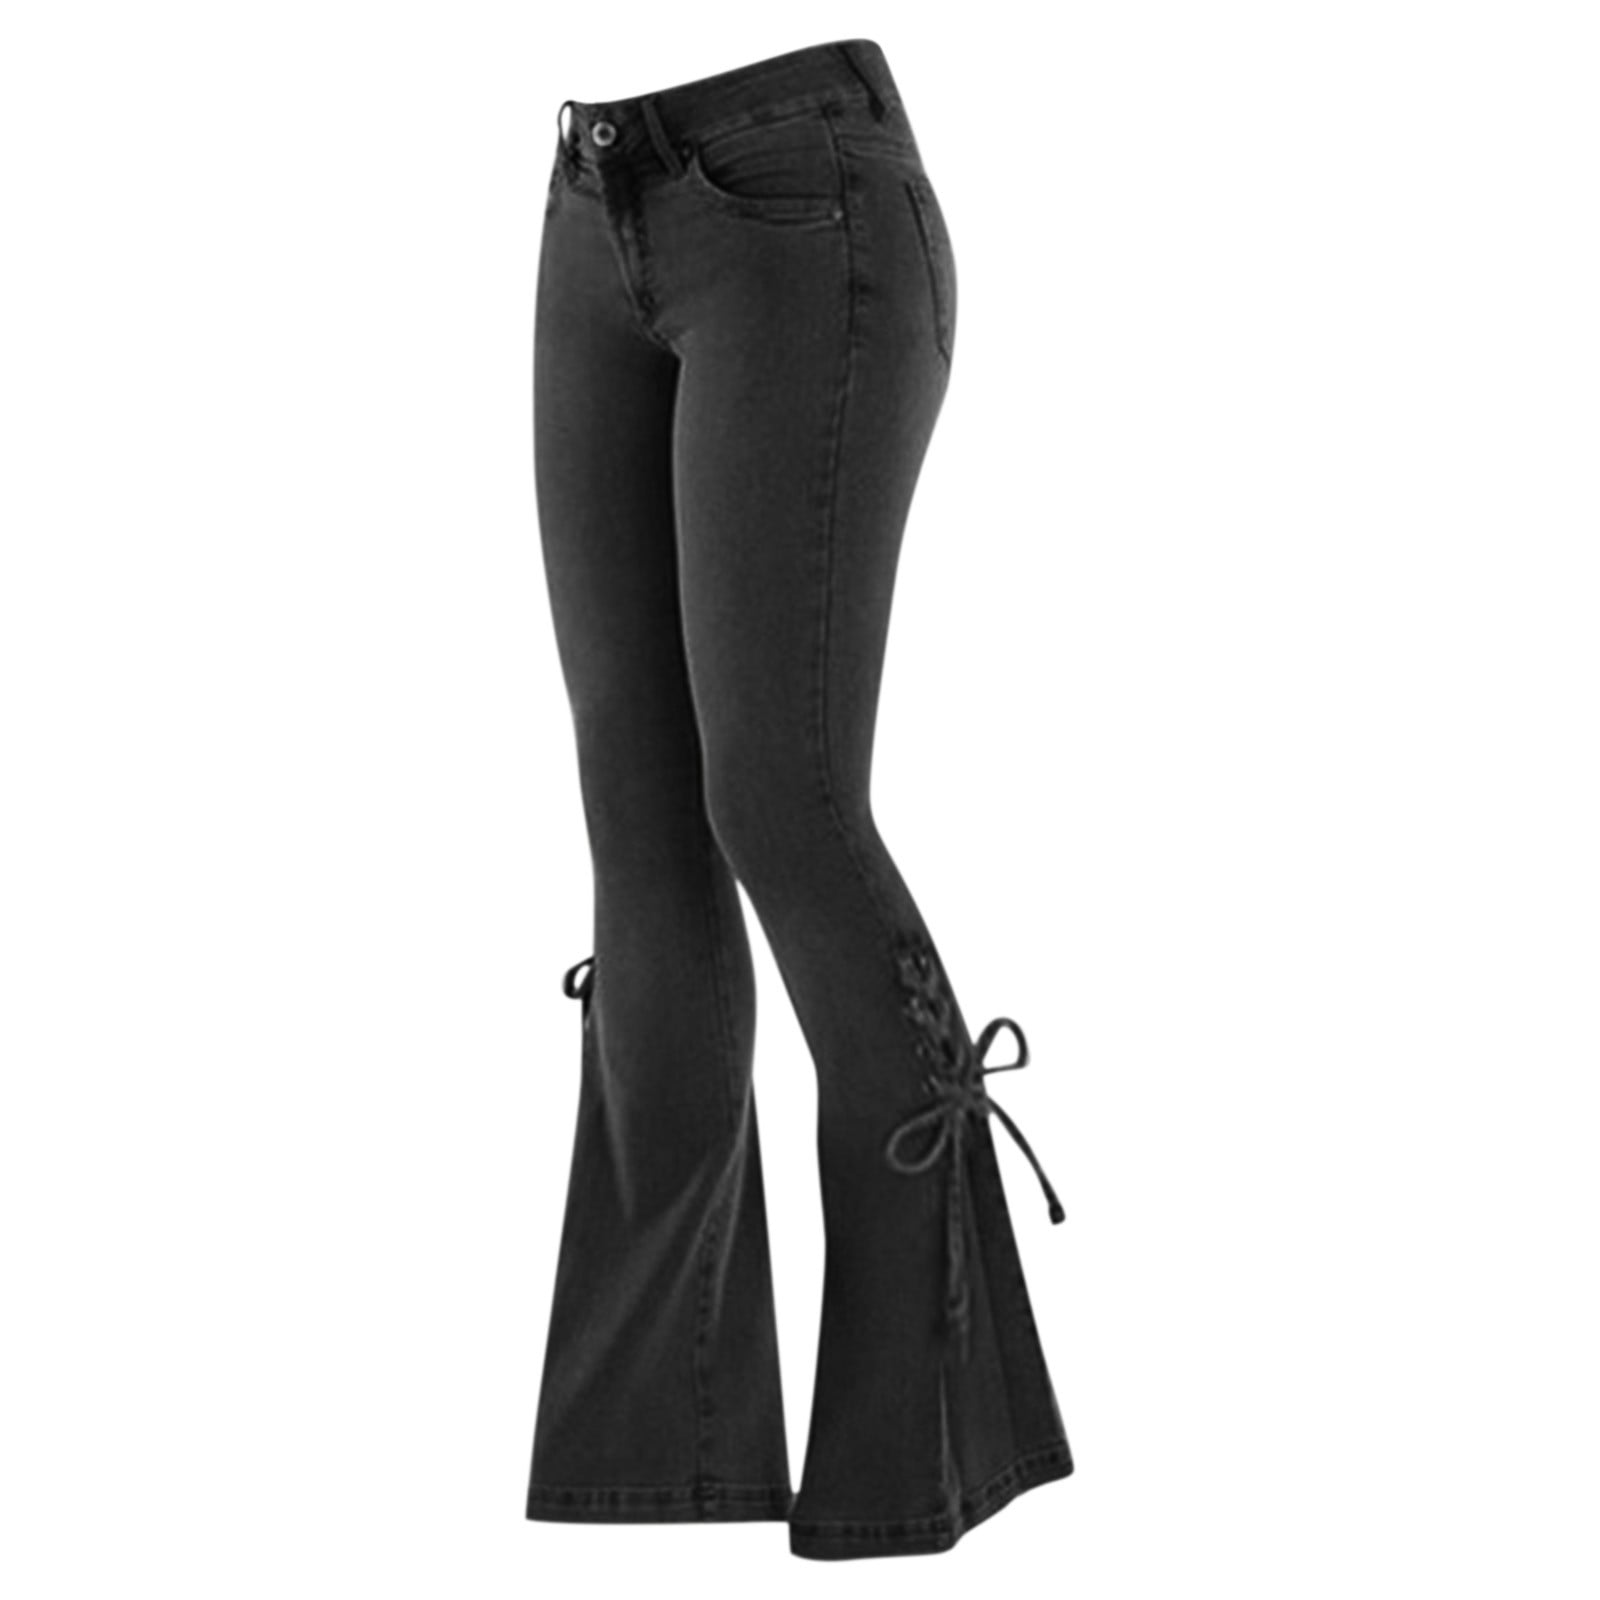 ZMHEGW High Waisted Cargo Pants Women Lace Up Denim Jeans Mid